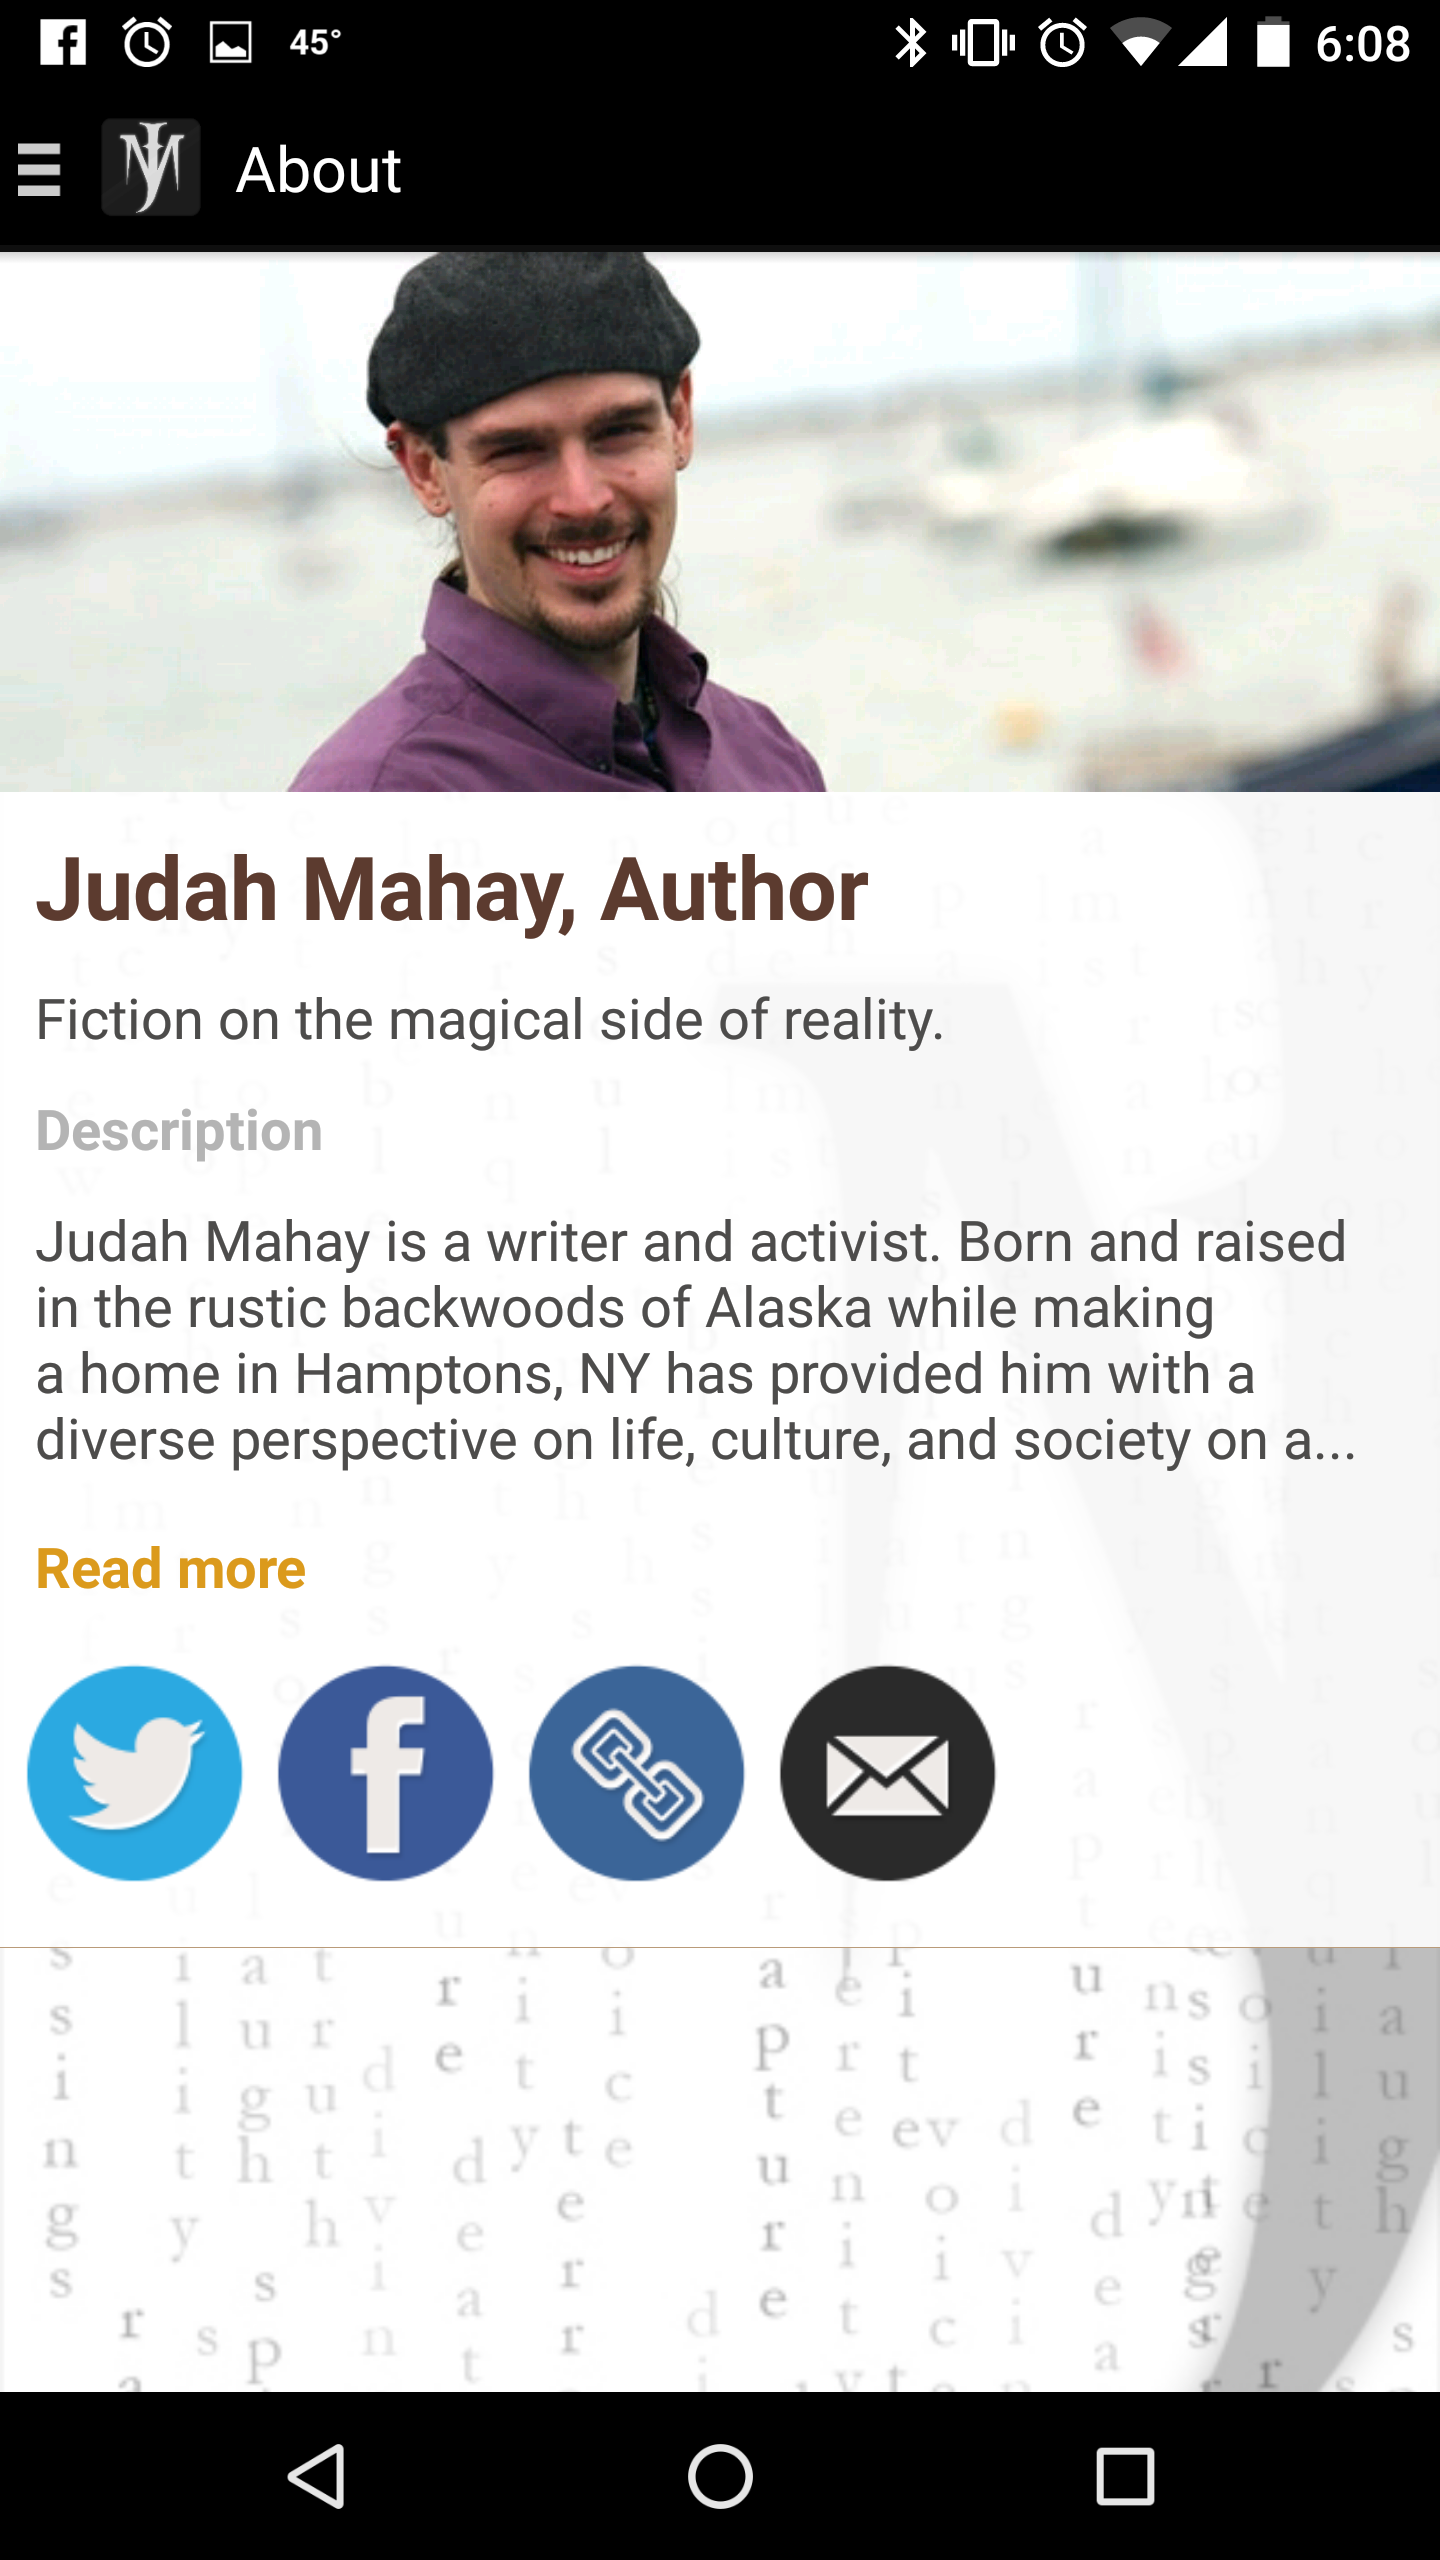 Judah Mahay, Author App